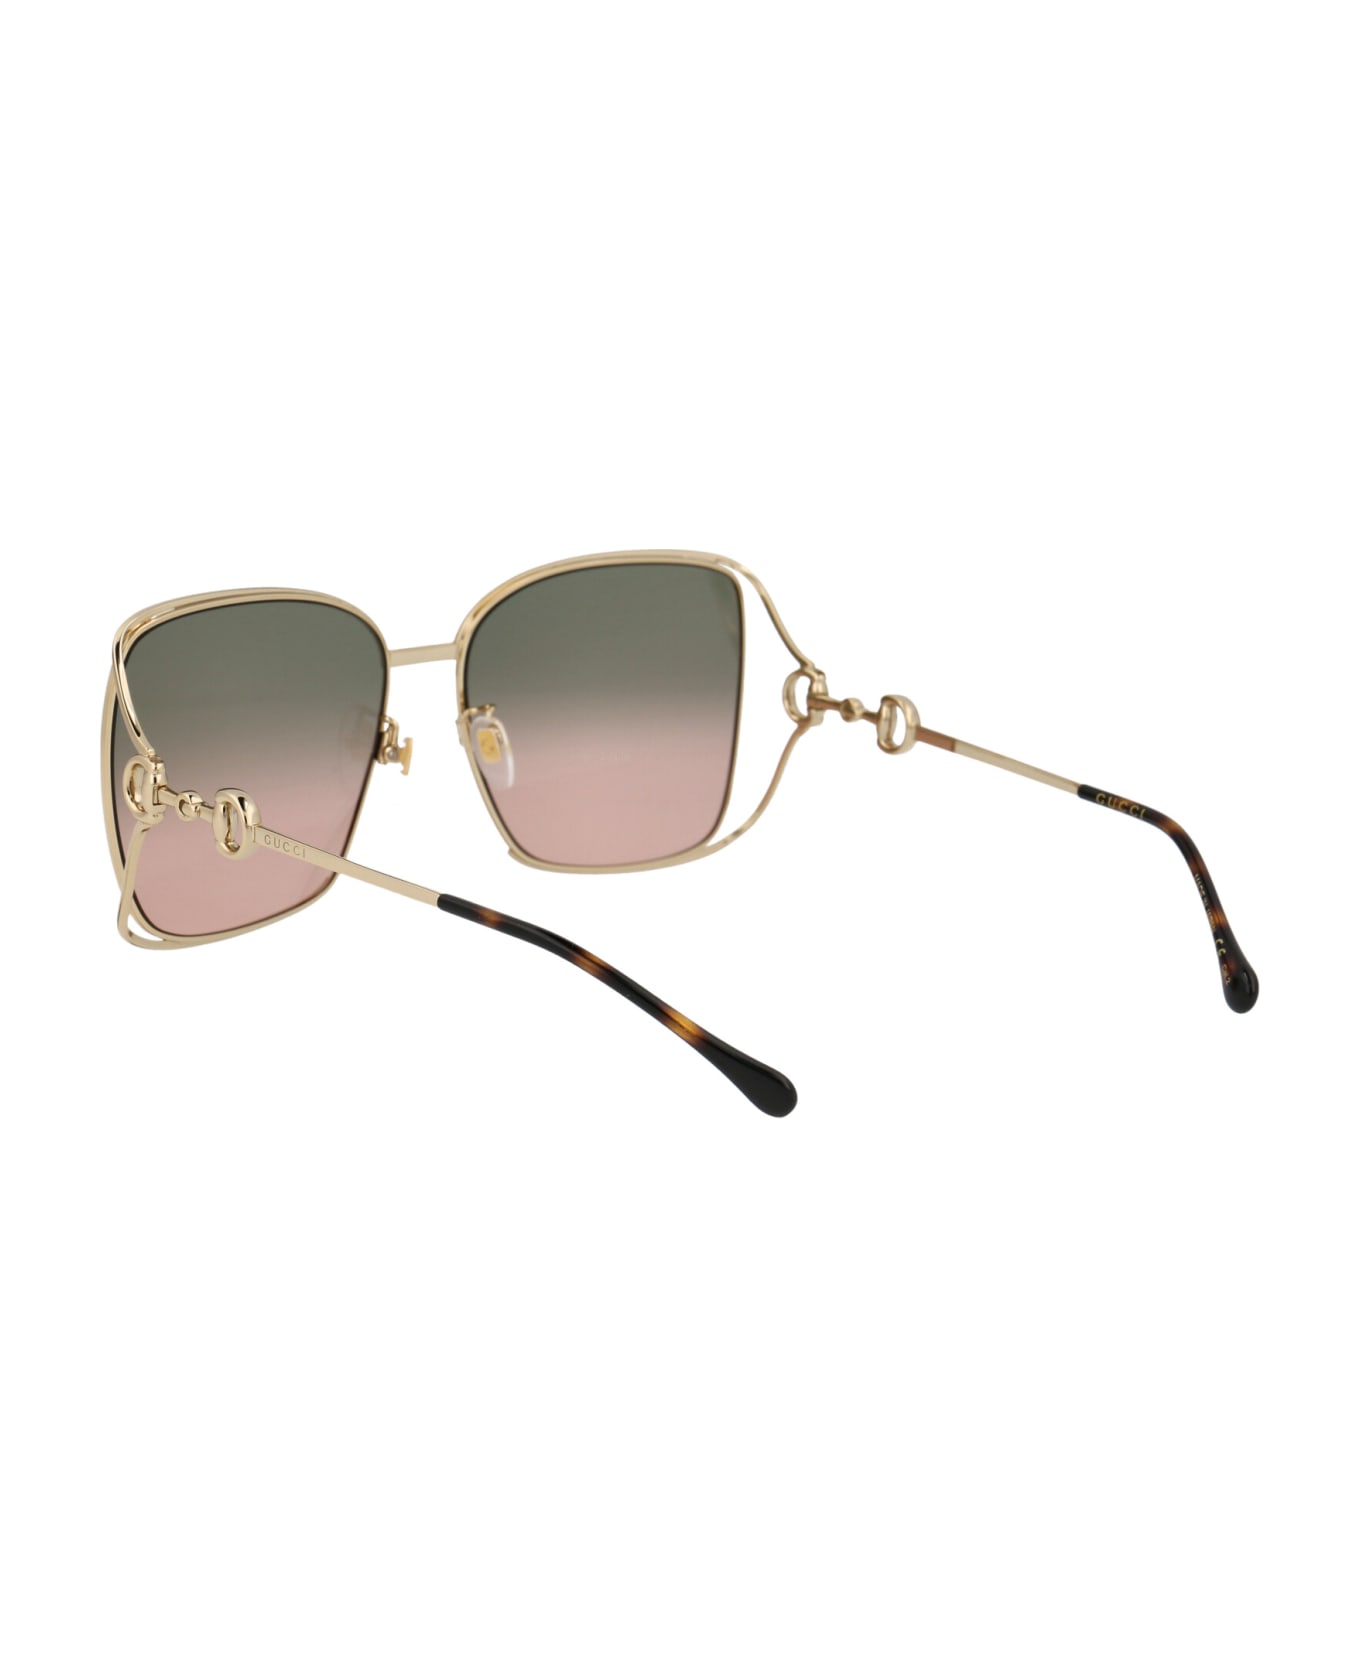 Gucci Eyewear Gg1020s Sunglasses - 001 GOLD GOLD GREEN サングラス